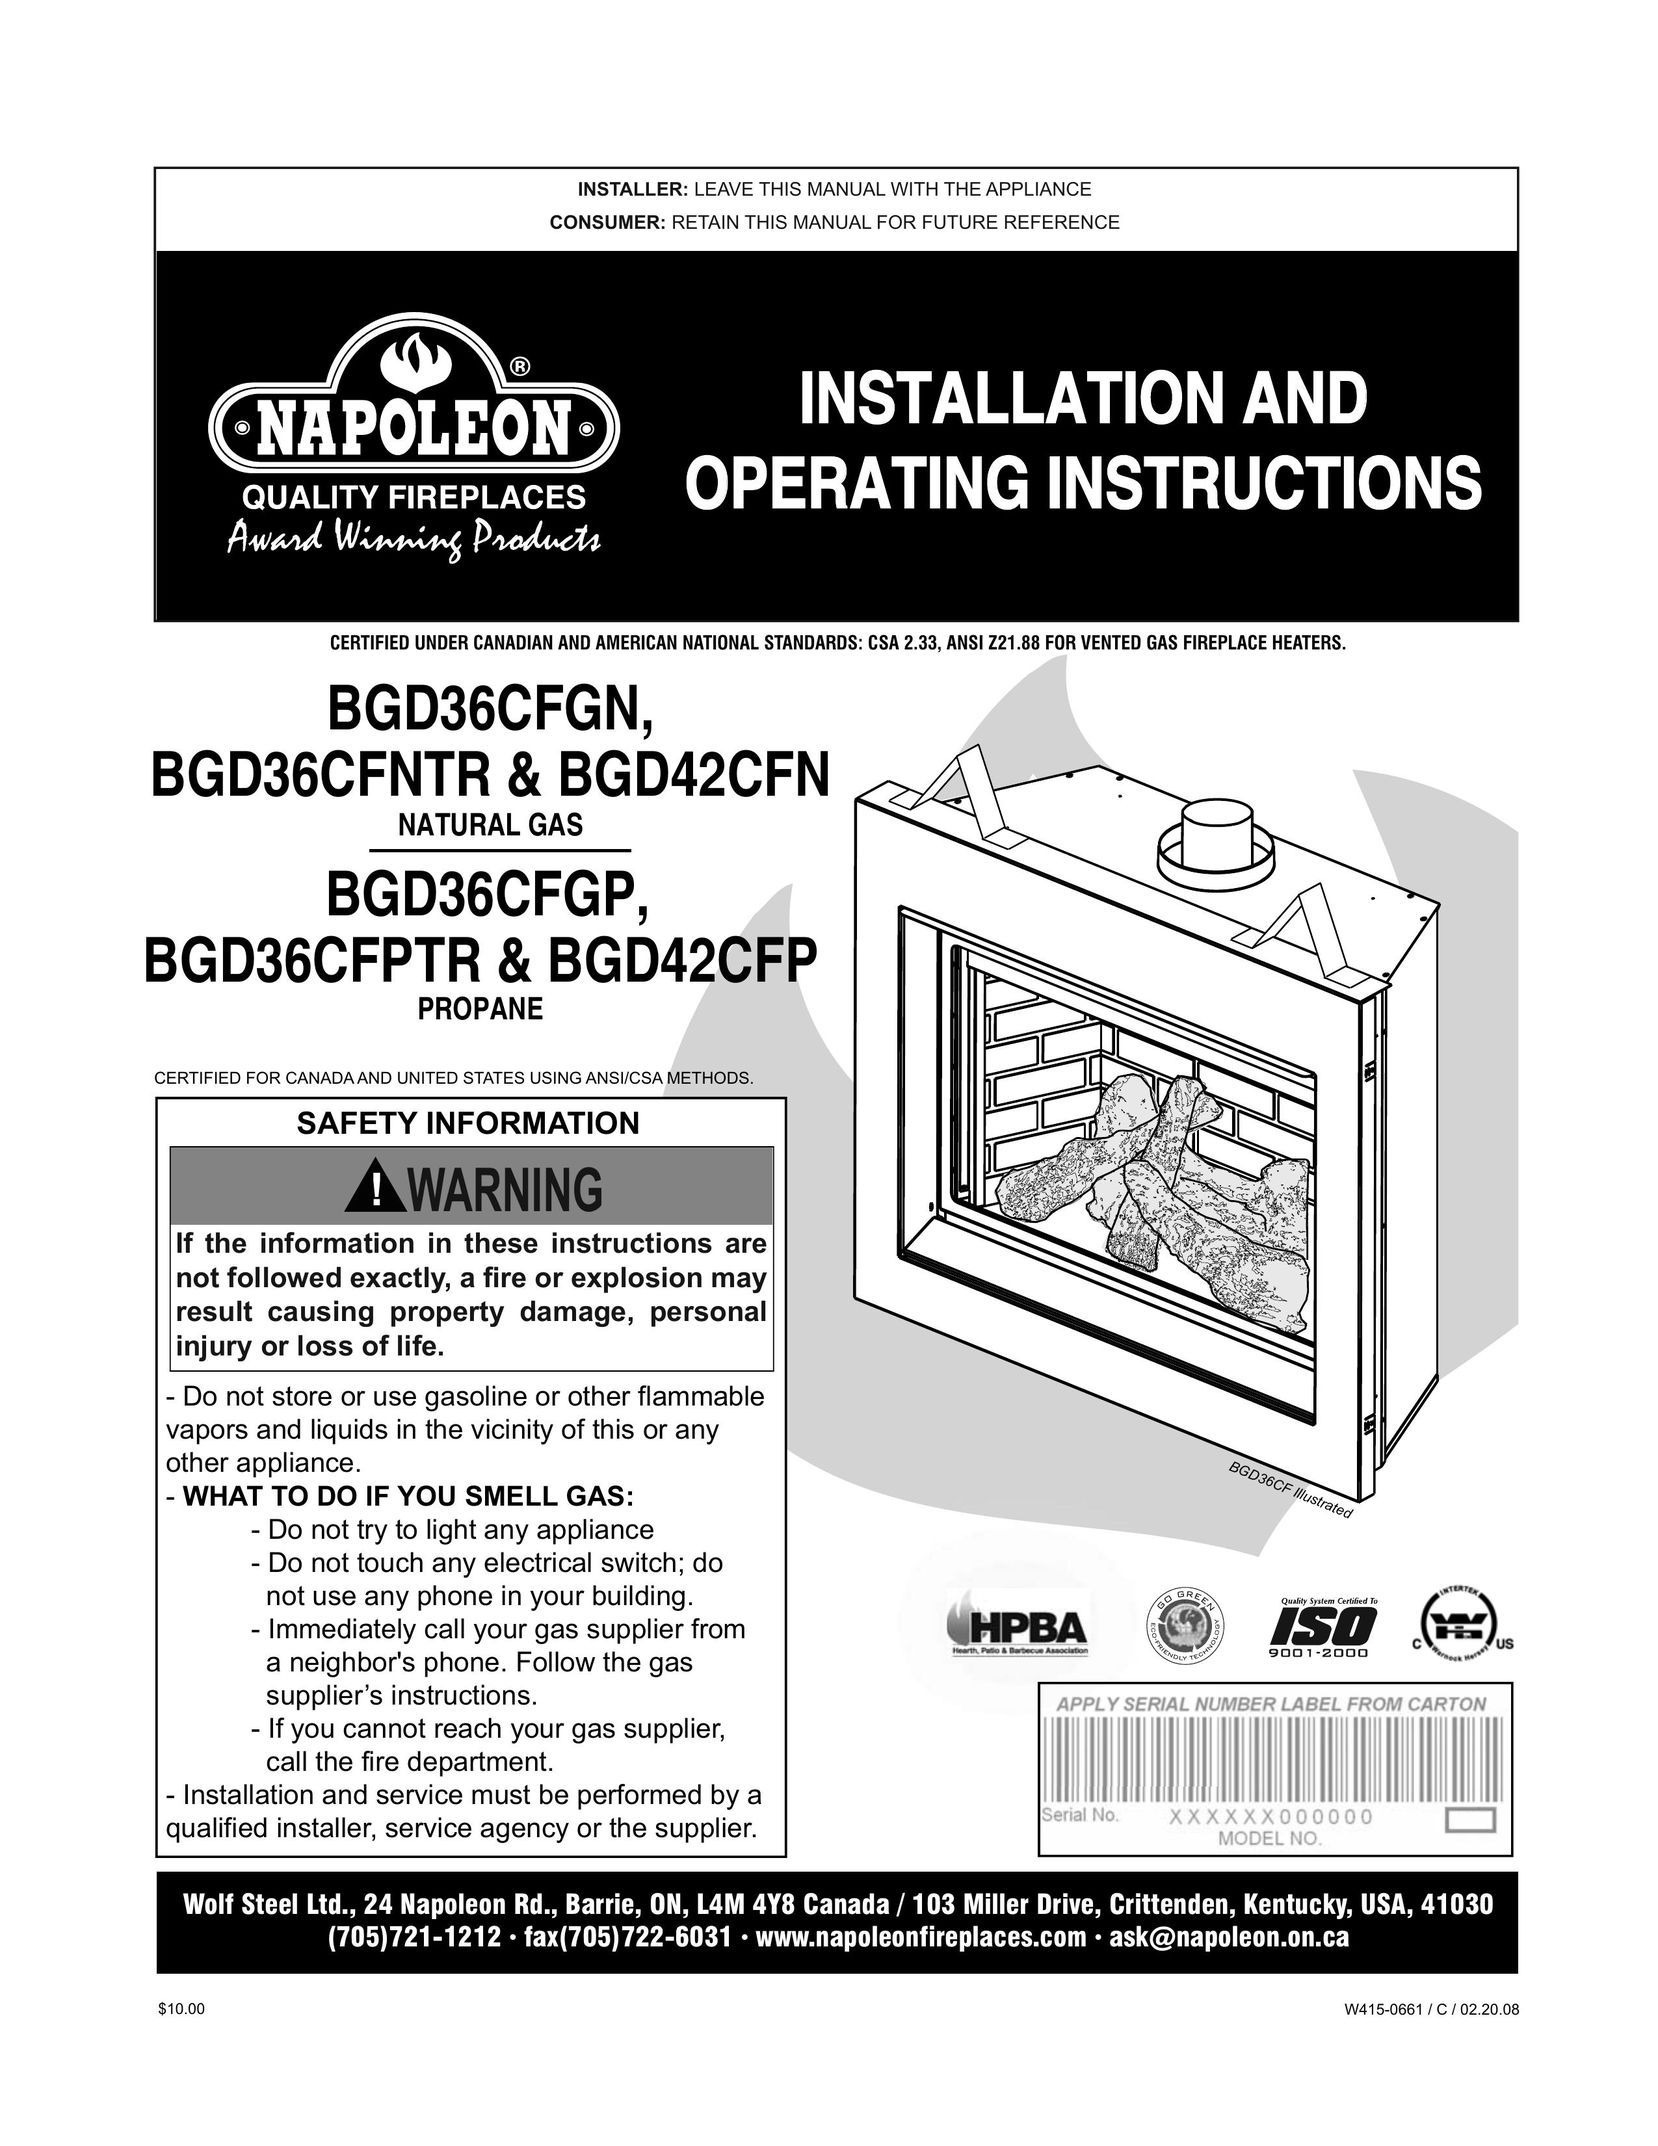 Napoleon Fireplaces BGD36CFGN Indoor Fireplace User Manual